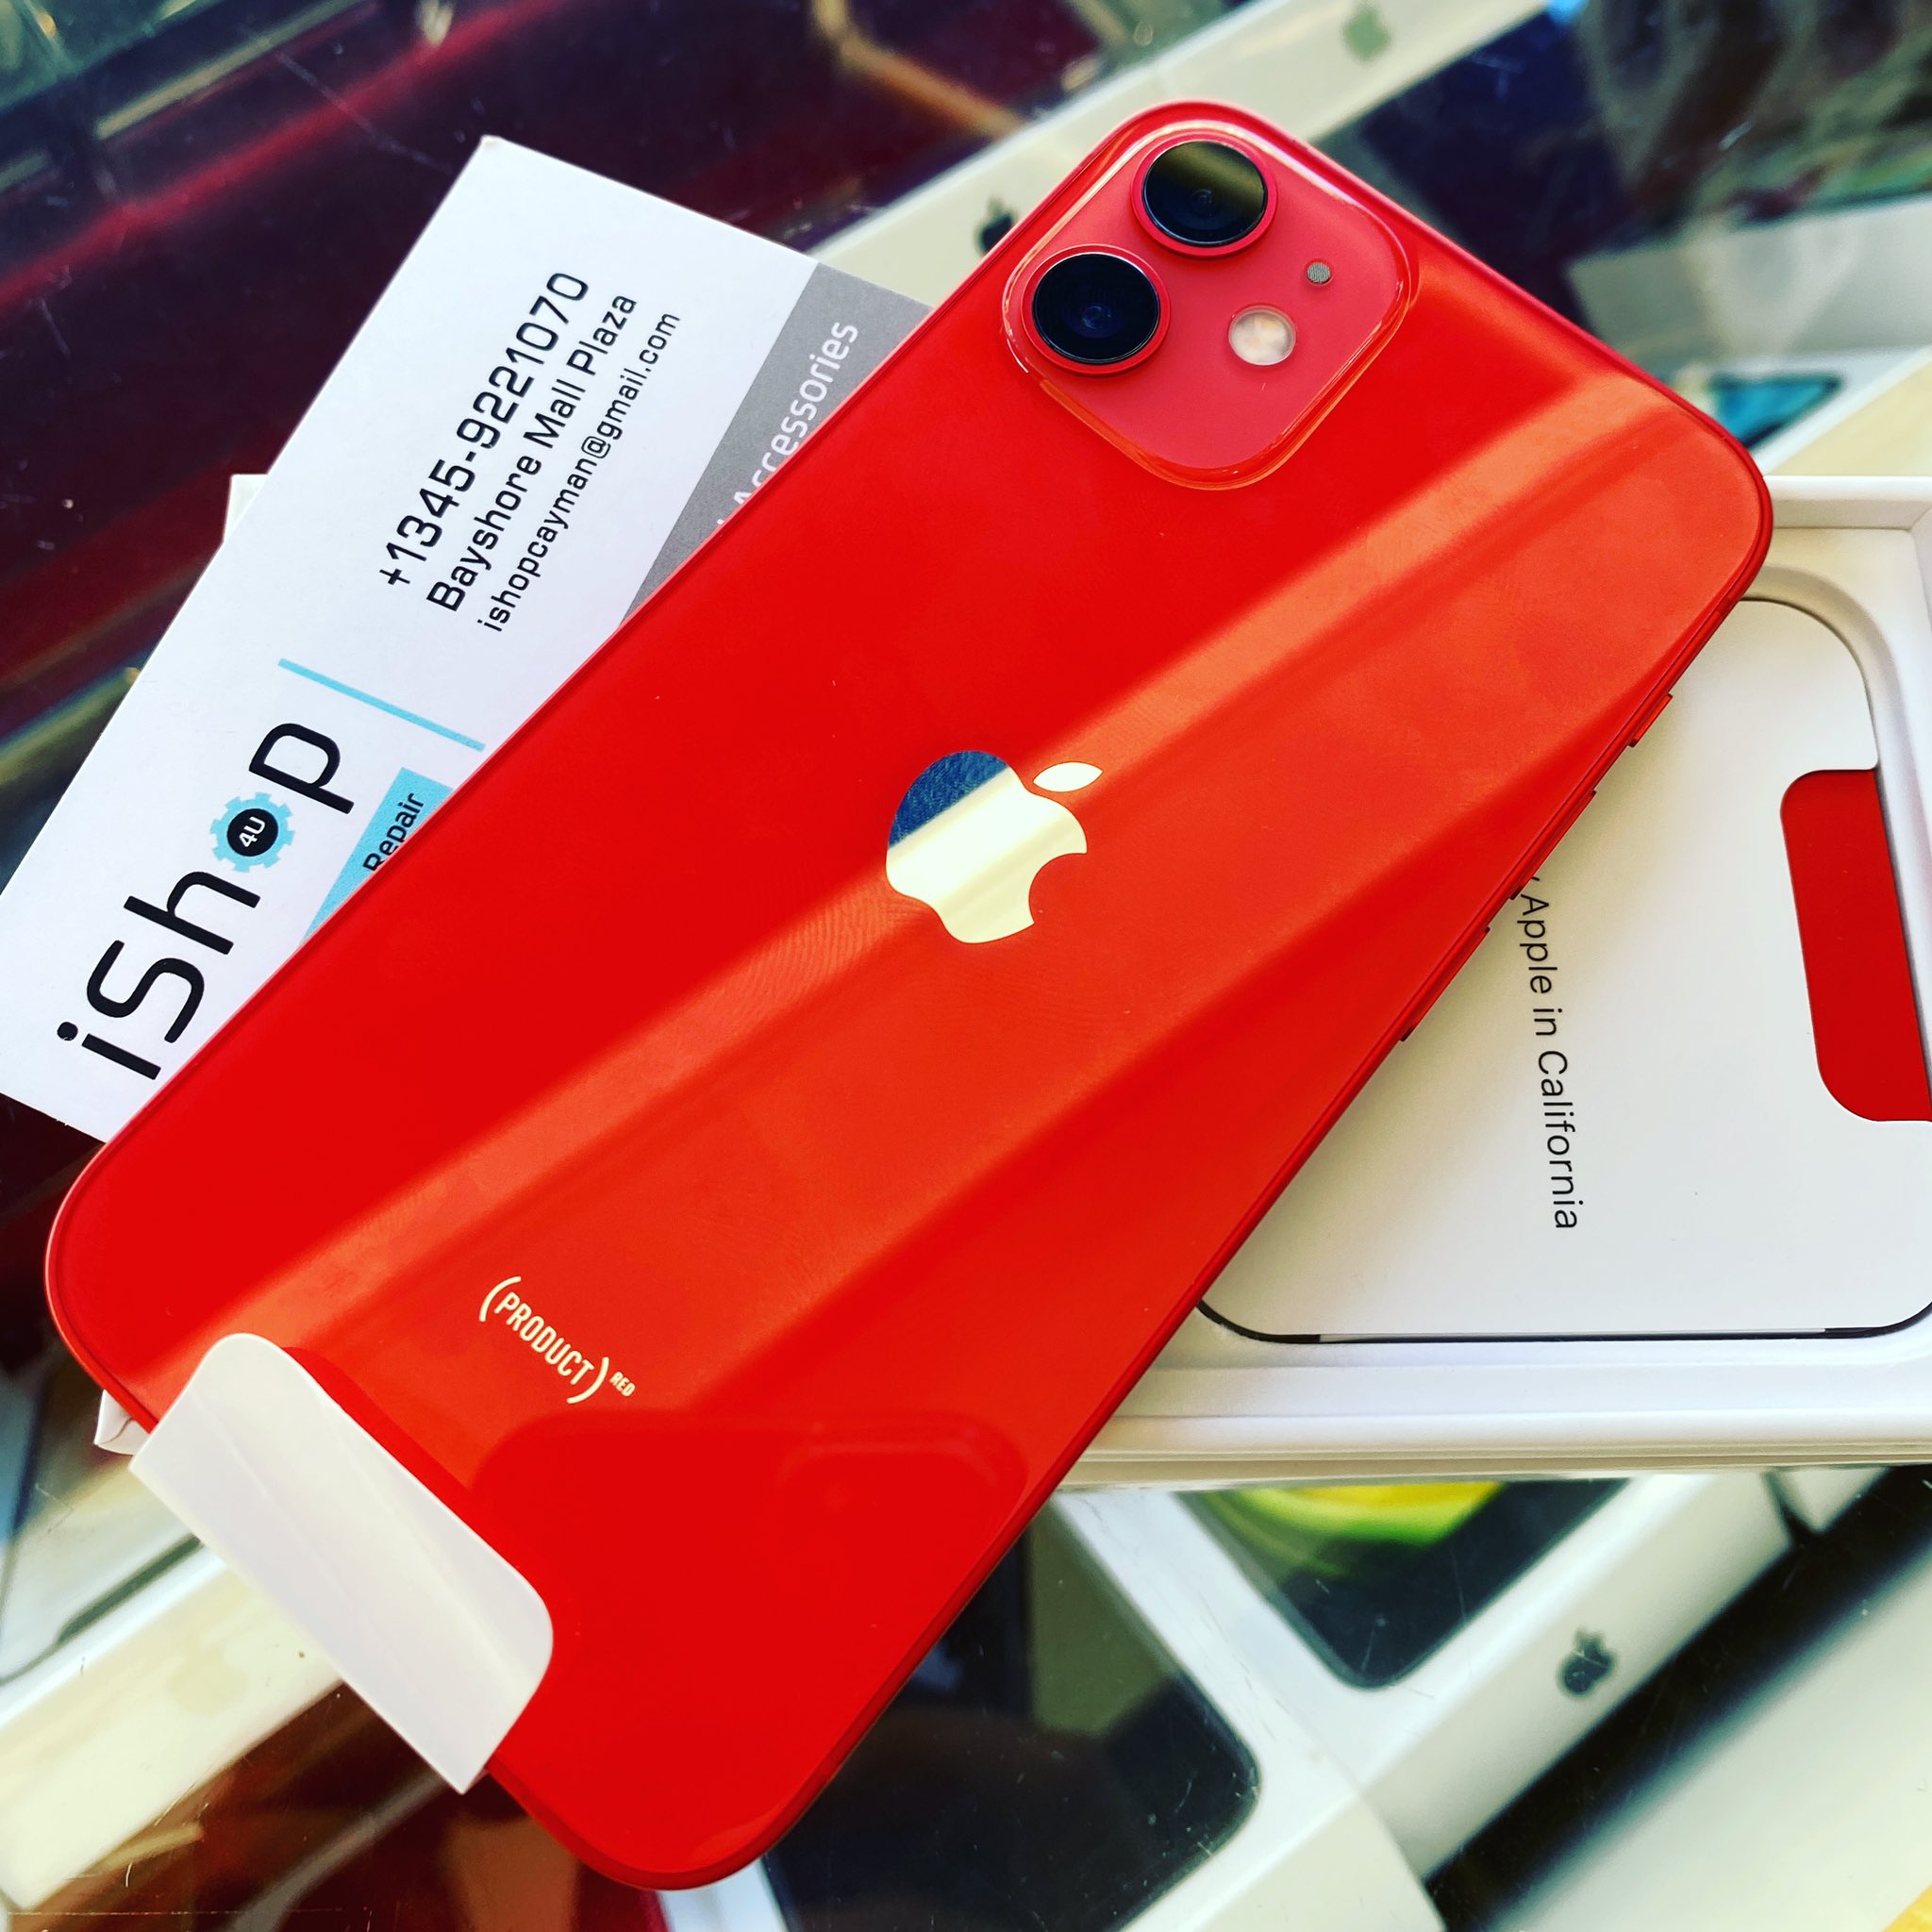 iPhone 11 Silicone Case - iShop